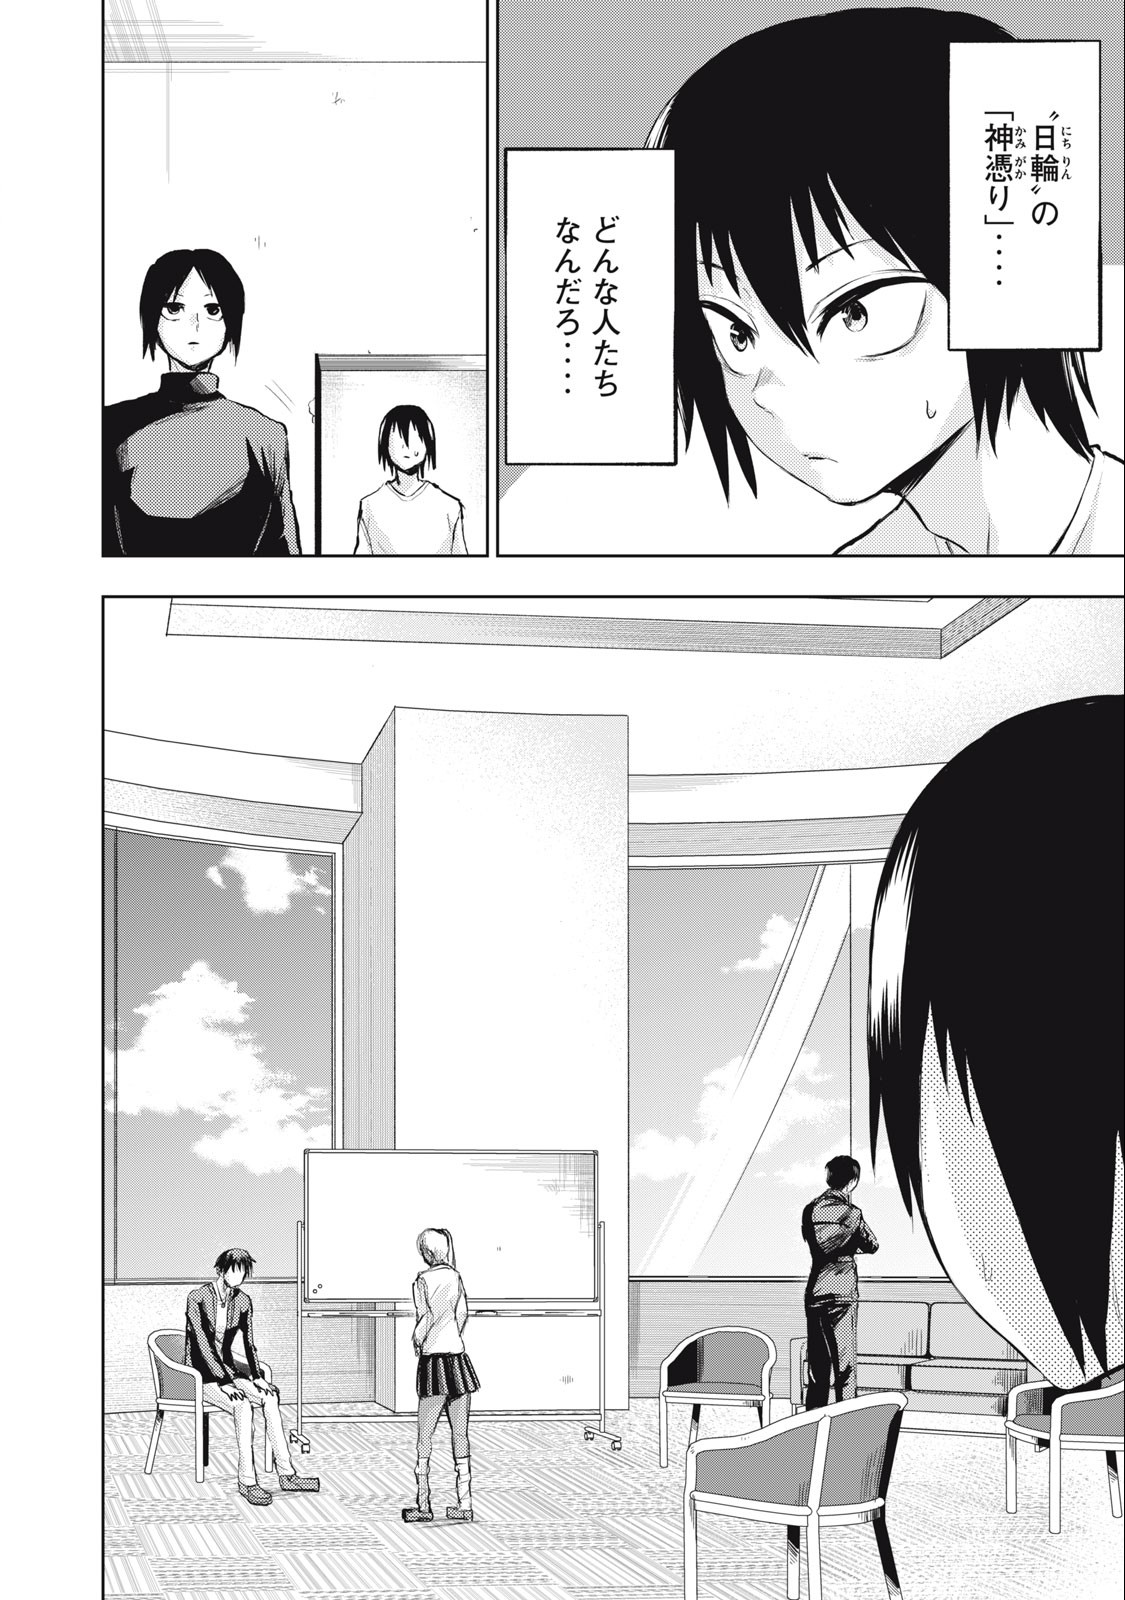 Kamigakari - Chapter 15 - Page 2